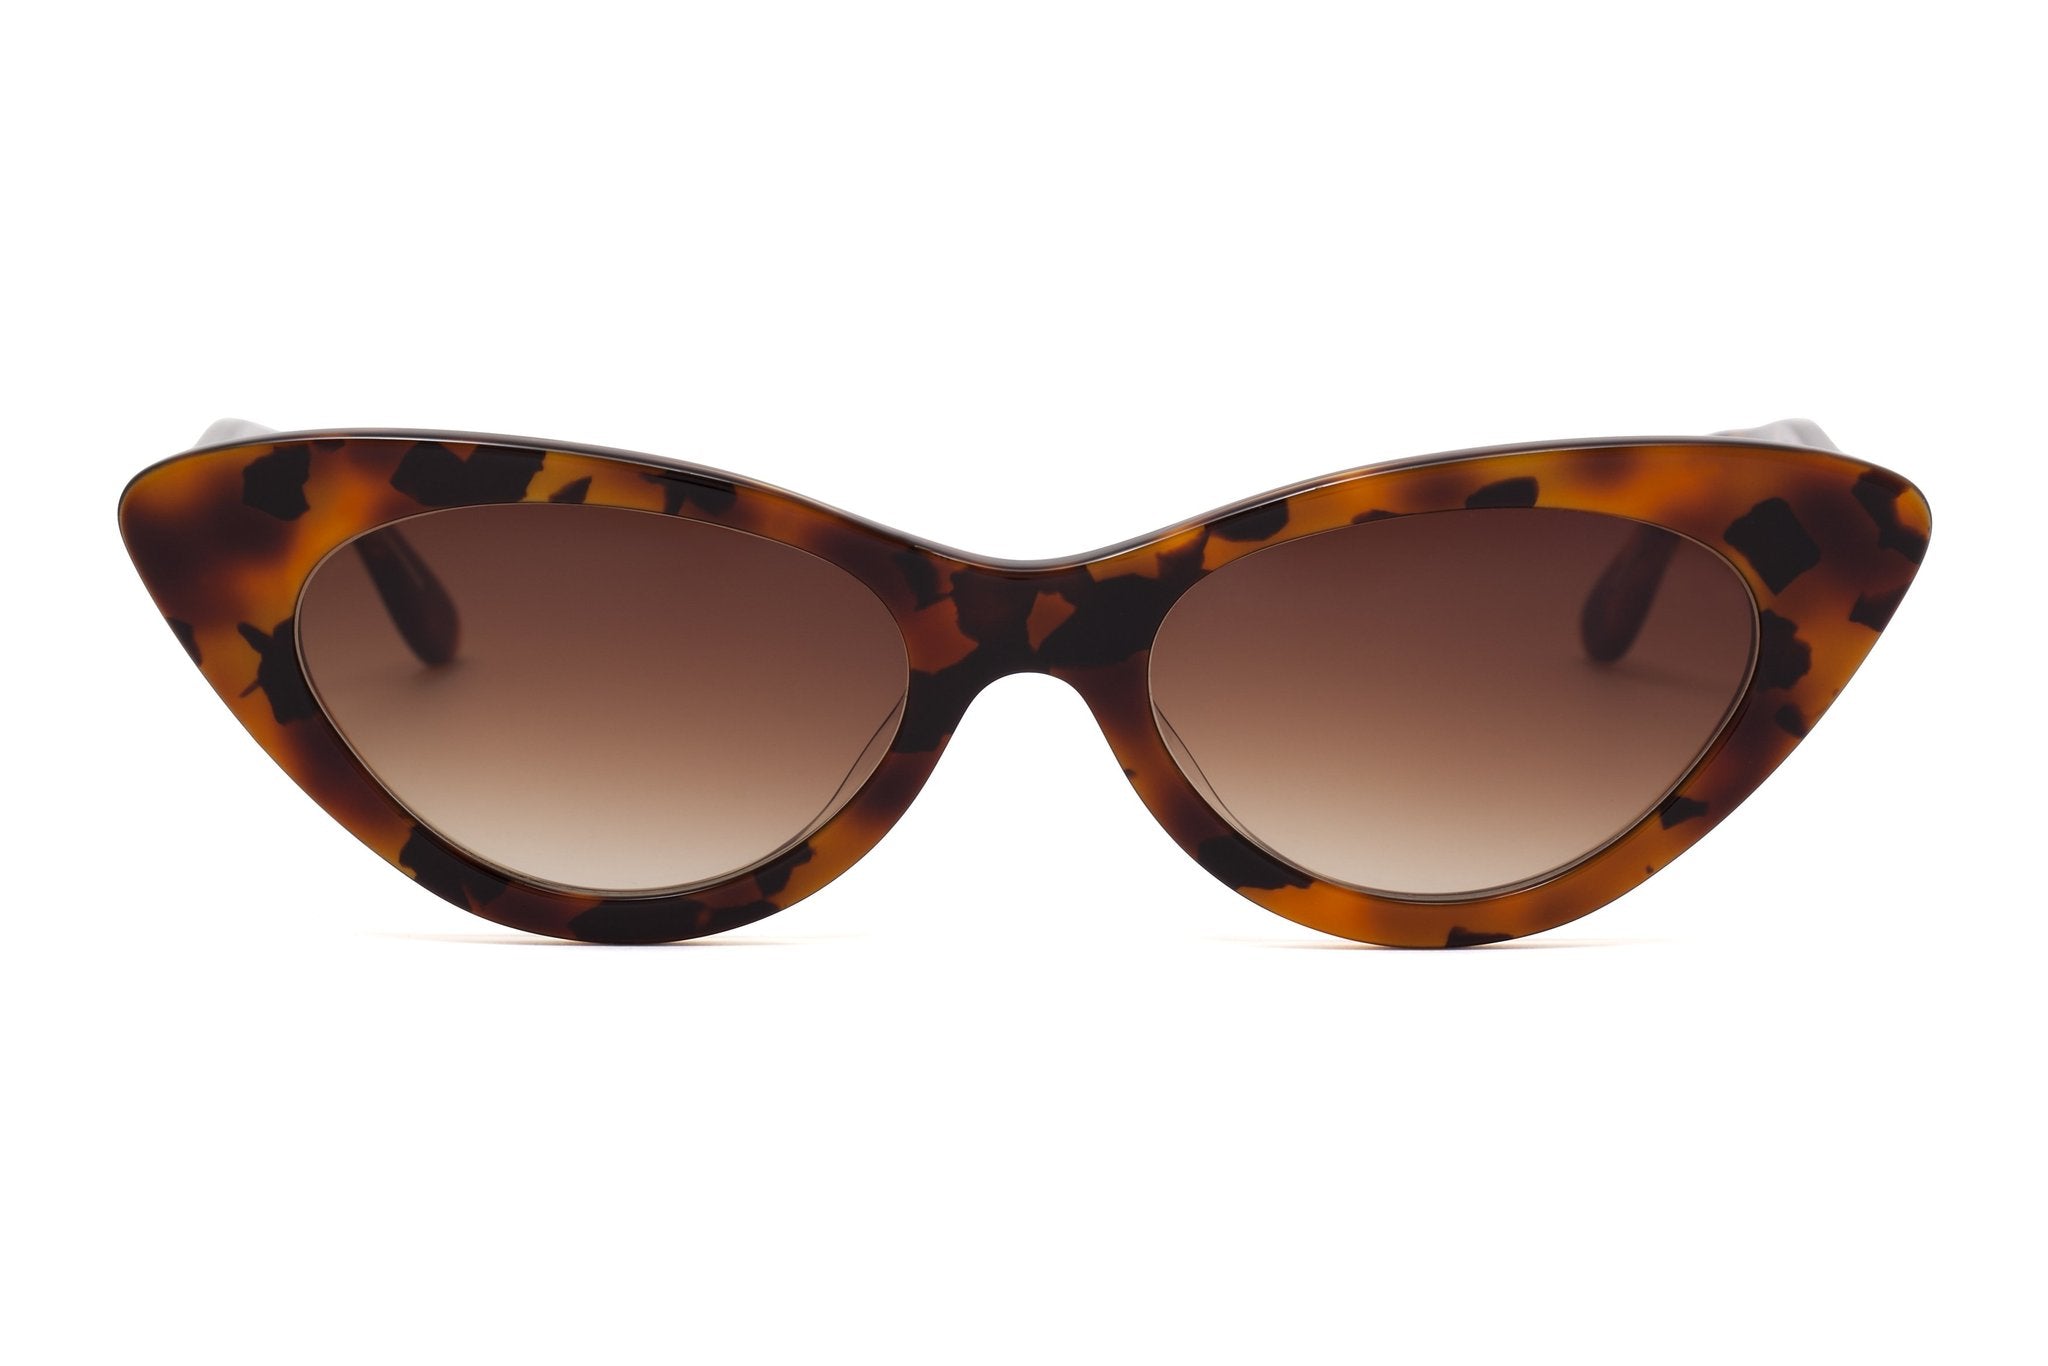 AUDREY Sunglasses M26 Honey Caramel Light & Dark Tortoiseshell - Paul Taylor Eyewear